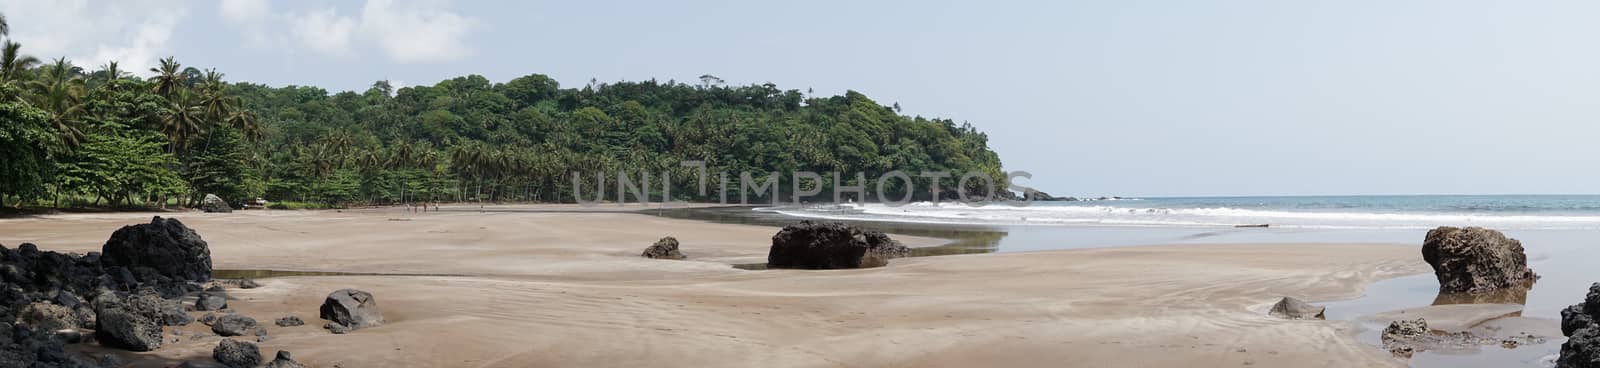 Seven Wave Beach, Sao Tome and Principe, Africa